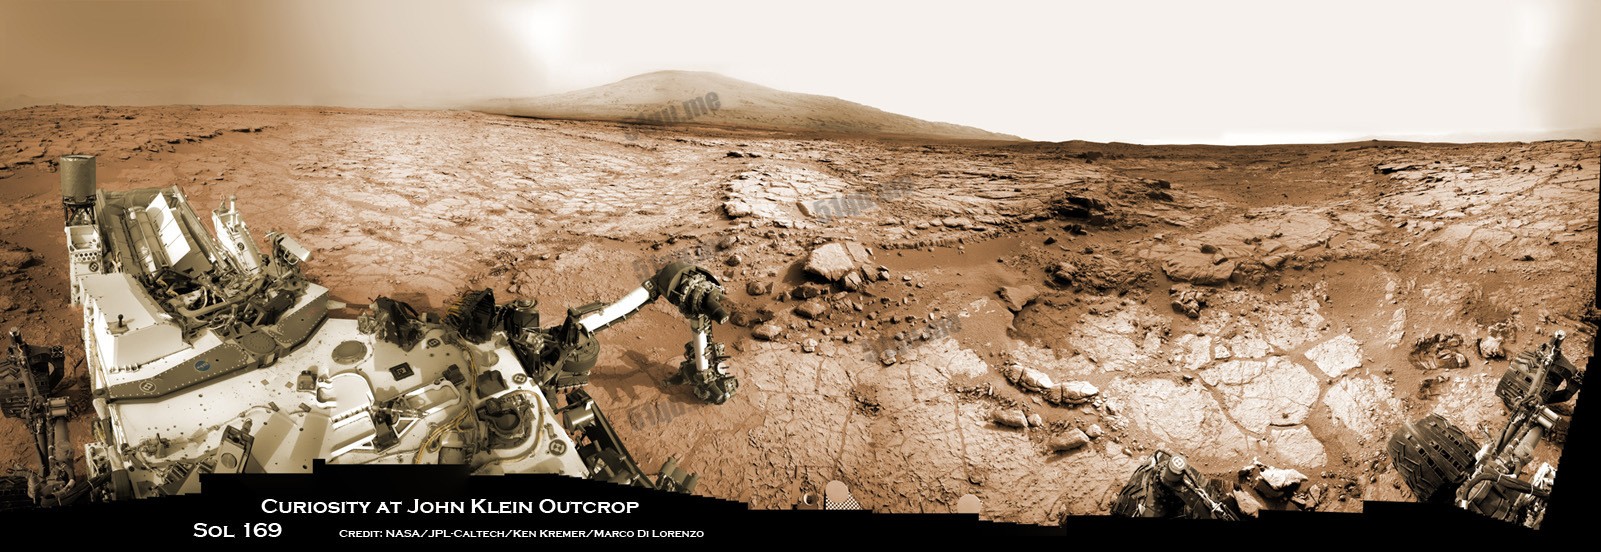 NASA好奇号在火星发现复杂有机物